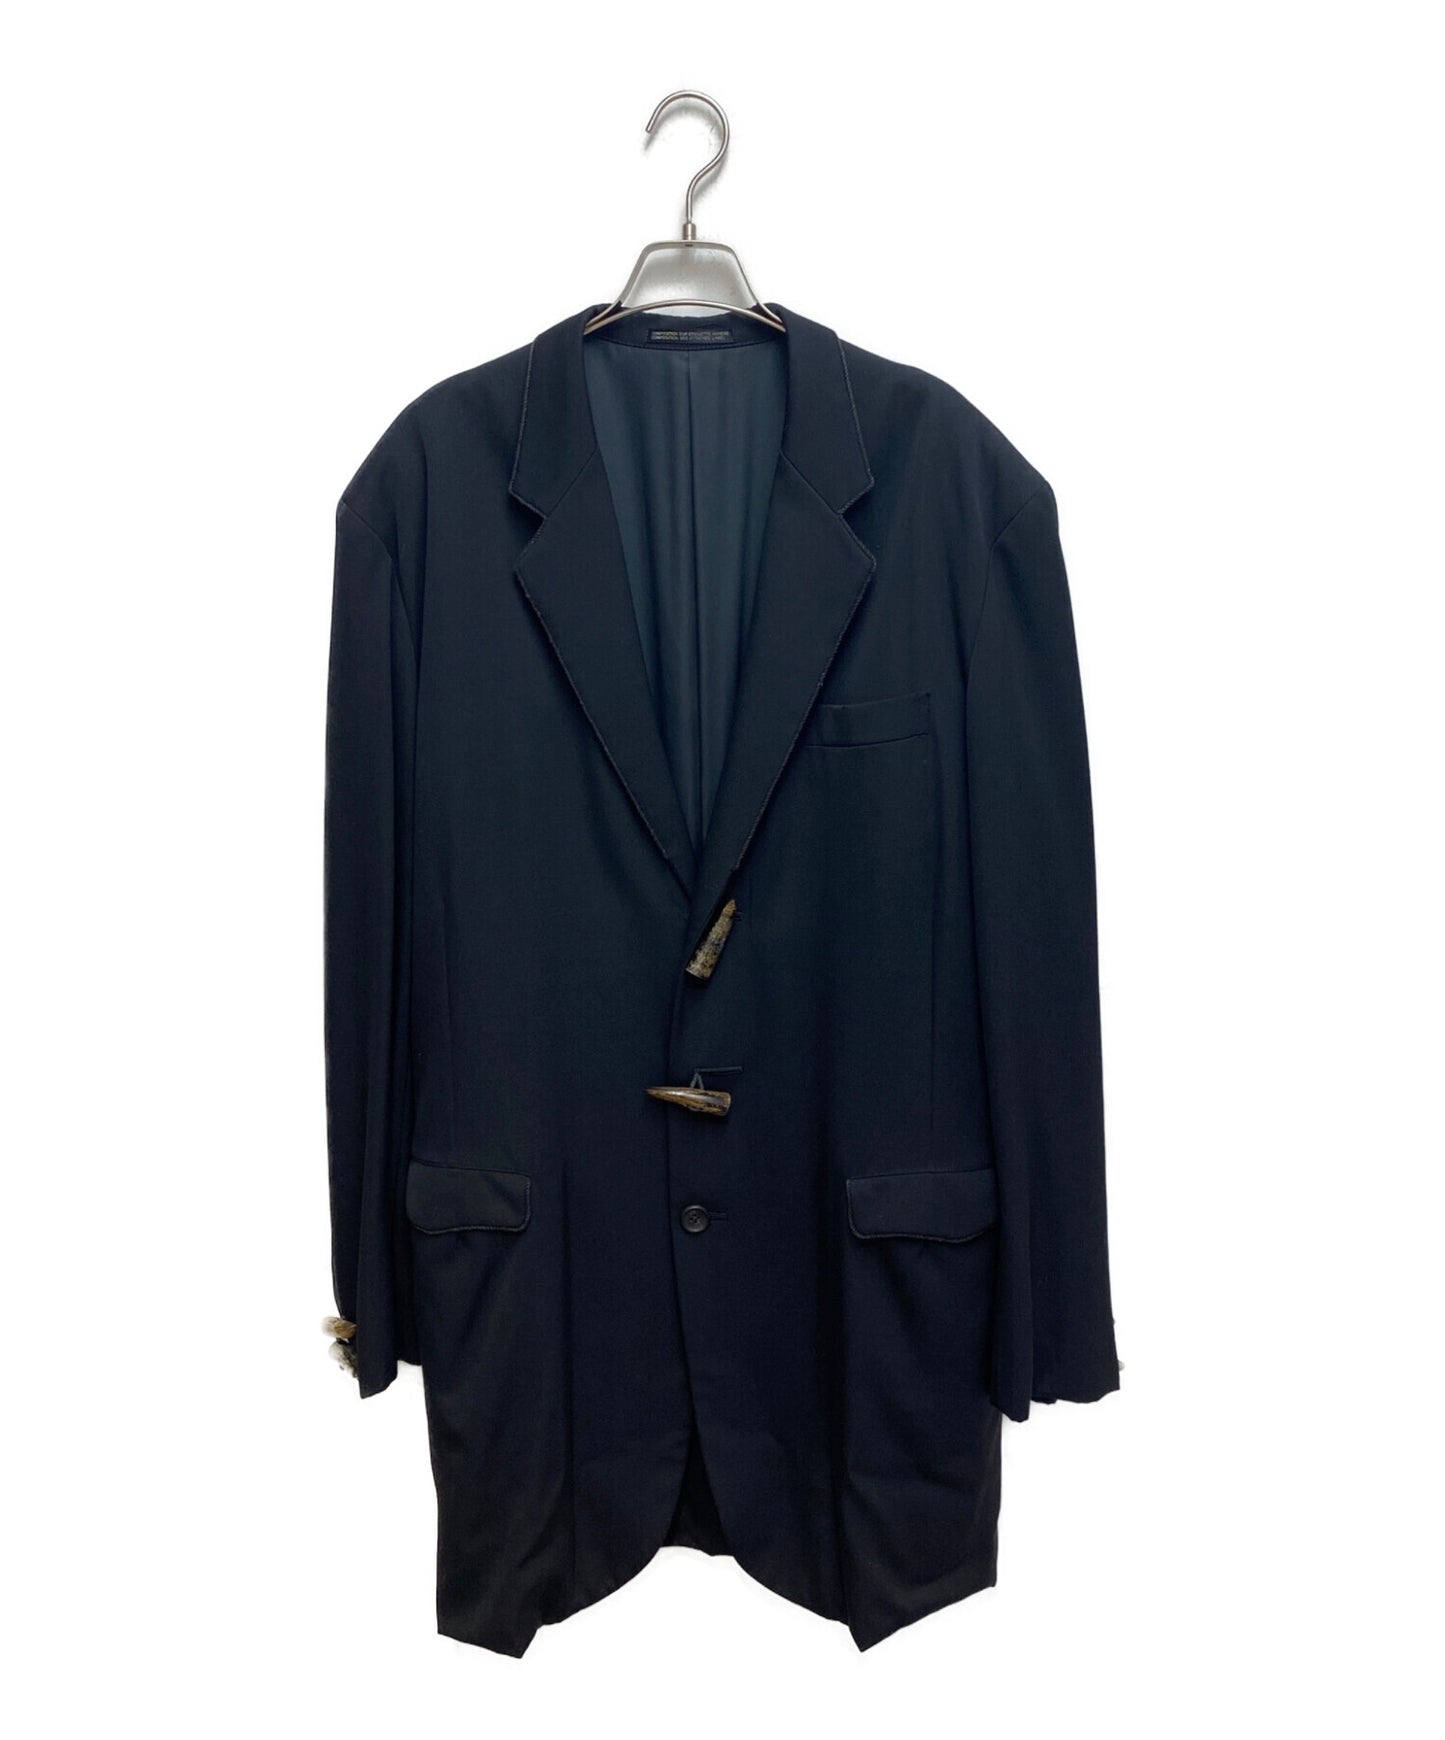 Yohji Yamamoto pour homme 87AW Long tailored jacket